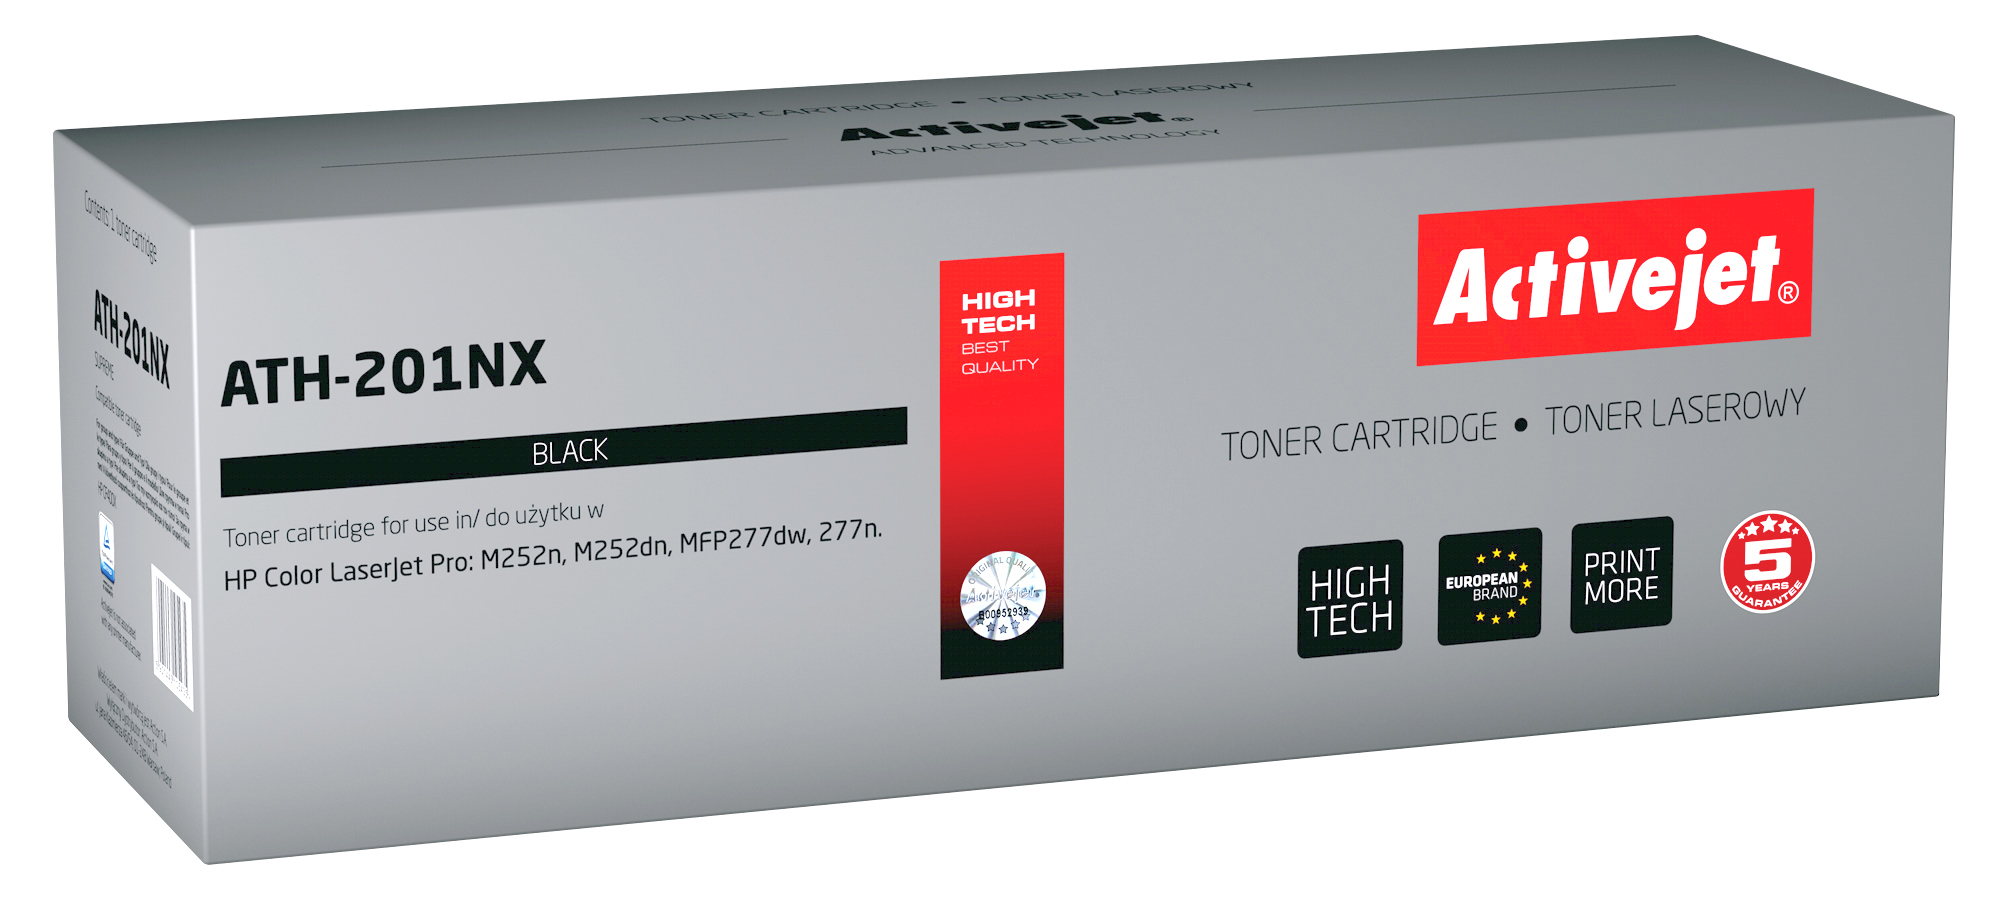 Toner Activejet ATH-201NX do drukarki HP, Zamiennik HP 201X CF400X;  Supreme;  2800 stron;  czarny.